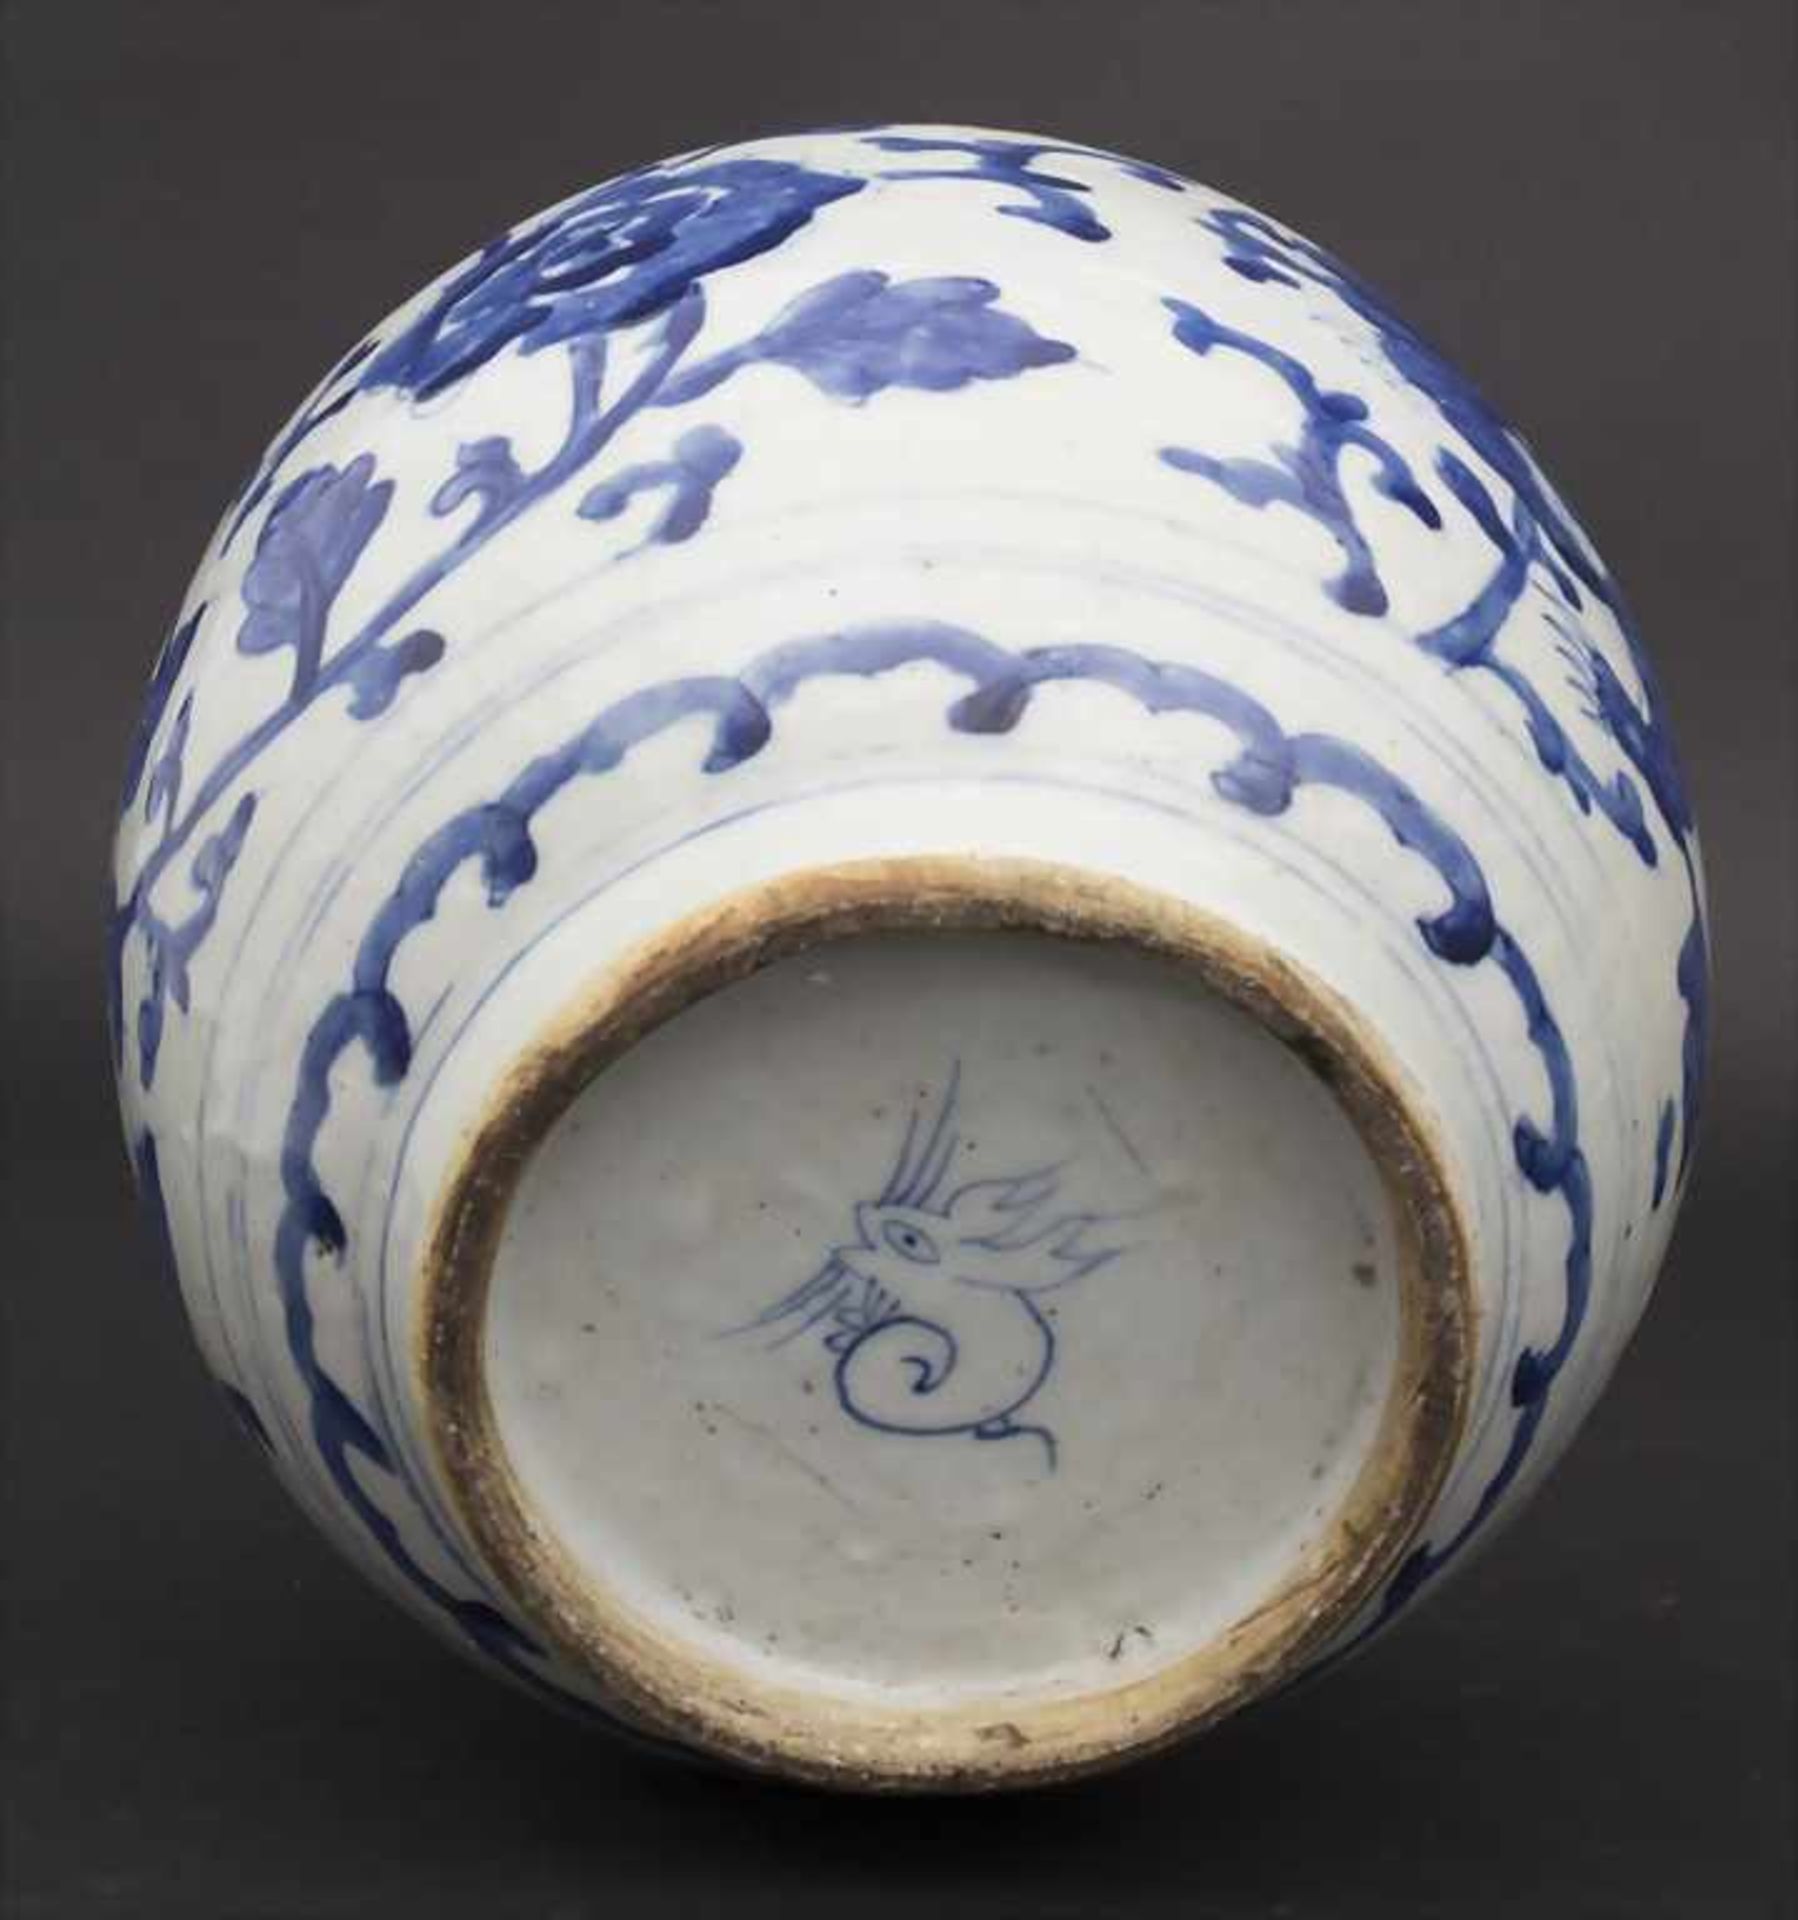 Schultertopf mit unterglasurblauer Malerei, Qing Dynastie, China, 18./19. Jh. - Image 7 of 11